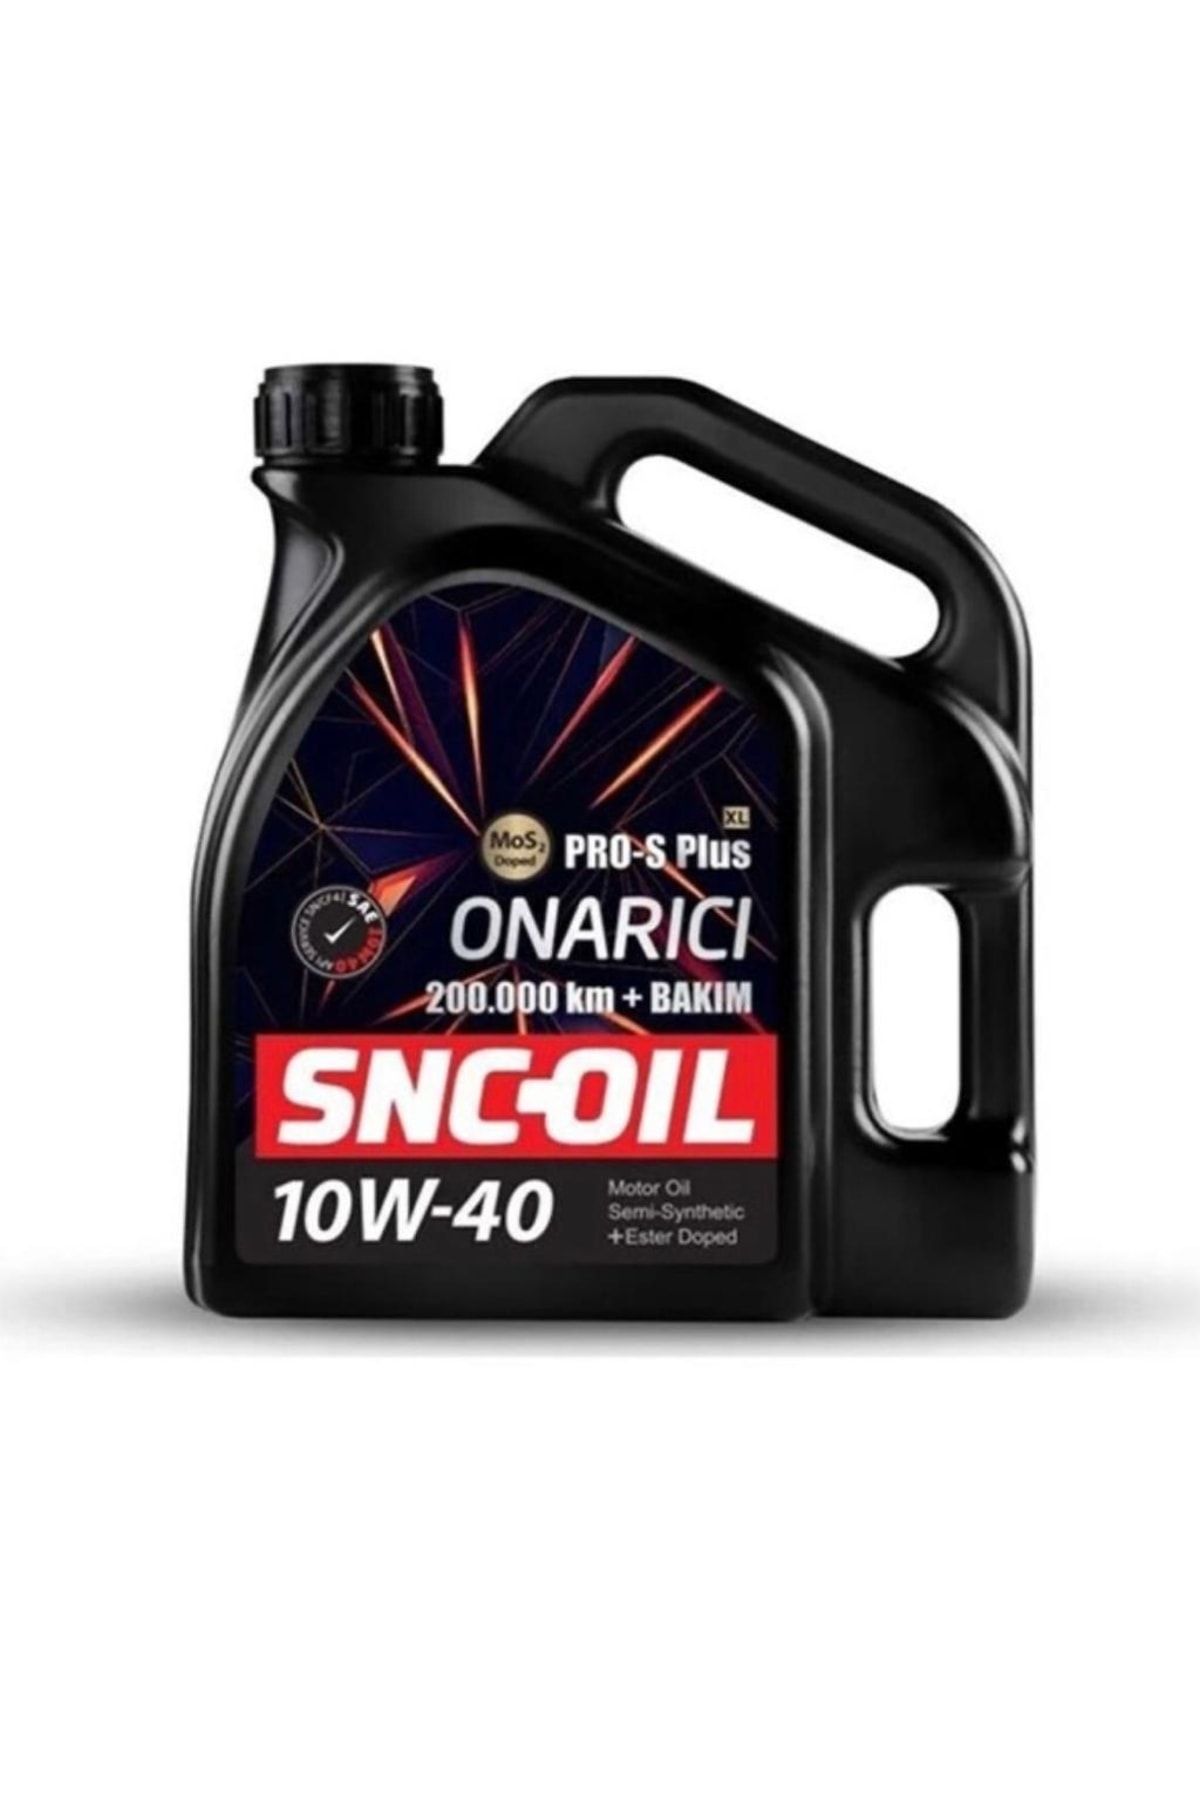 snc Oil 200.000 Km+ Pro-s Plus Onarıcı Xl 10w-40 Motor Yağı 4 Litre